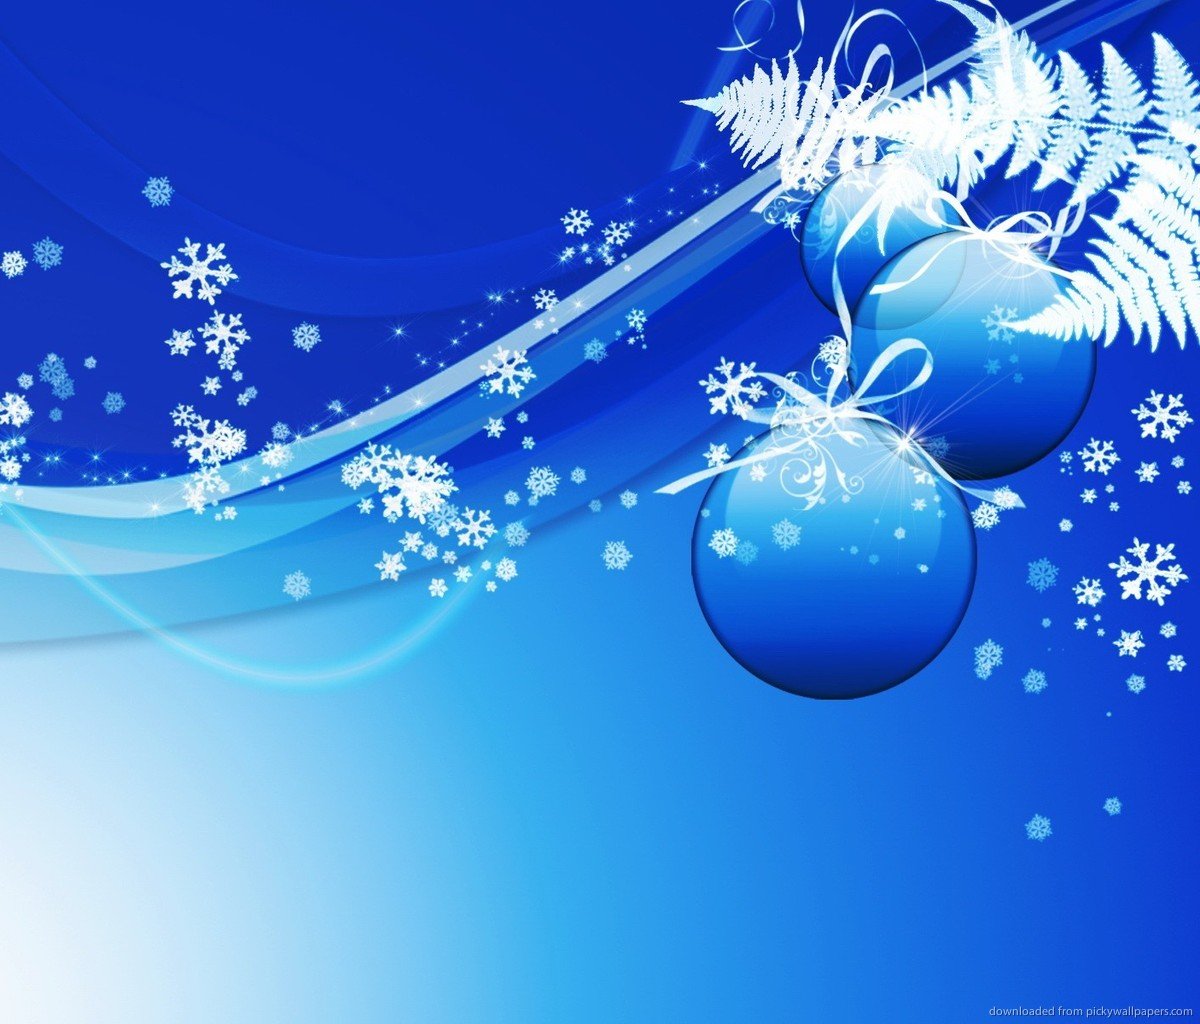  Blue Design Christmas Background Wallpaper For Samsung Galaxy Tab